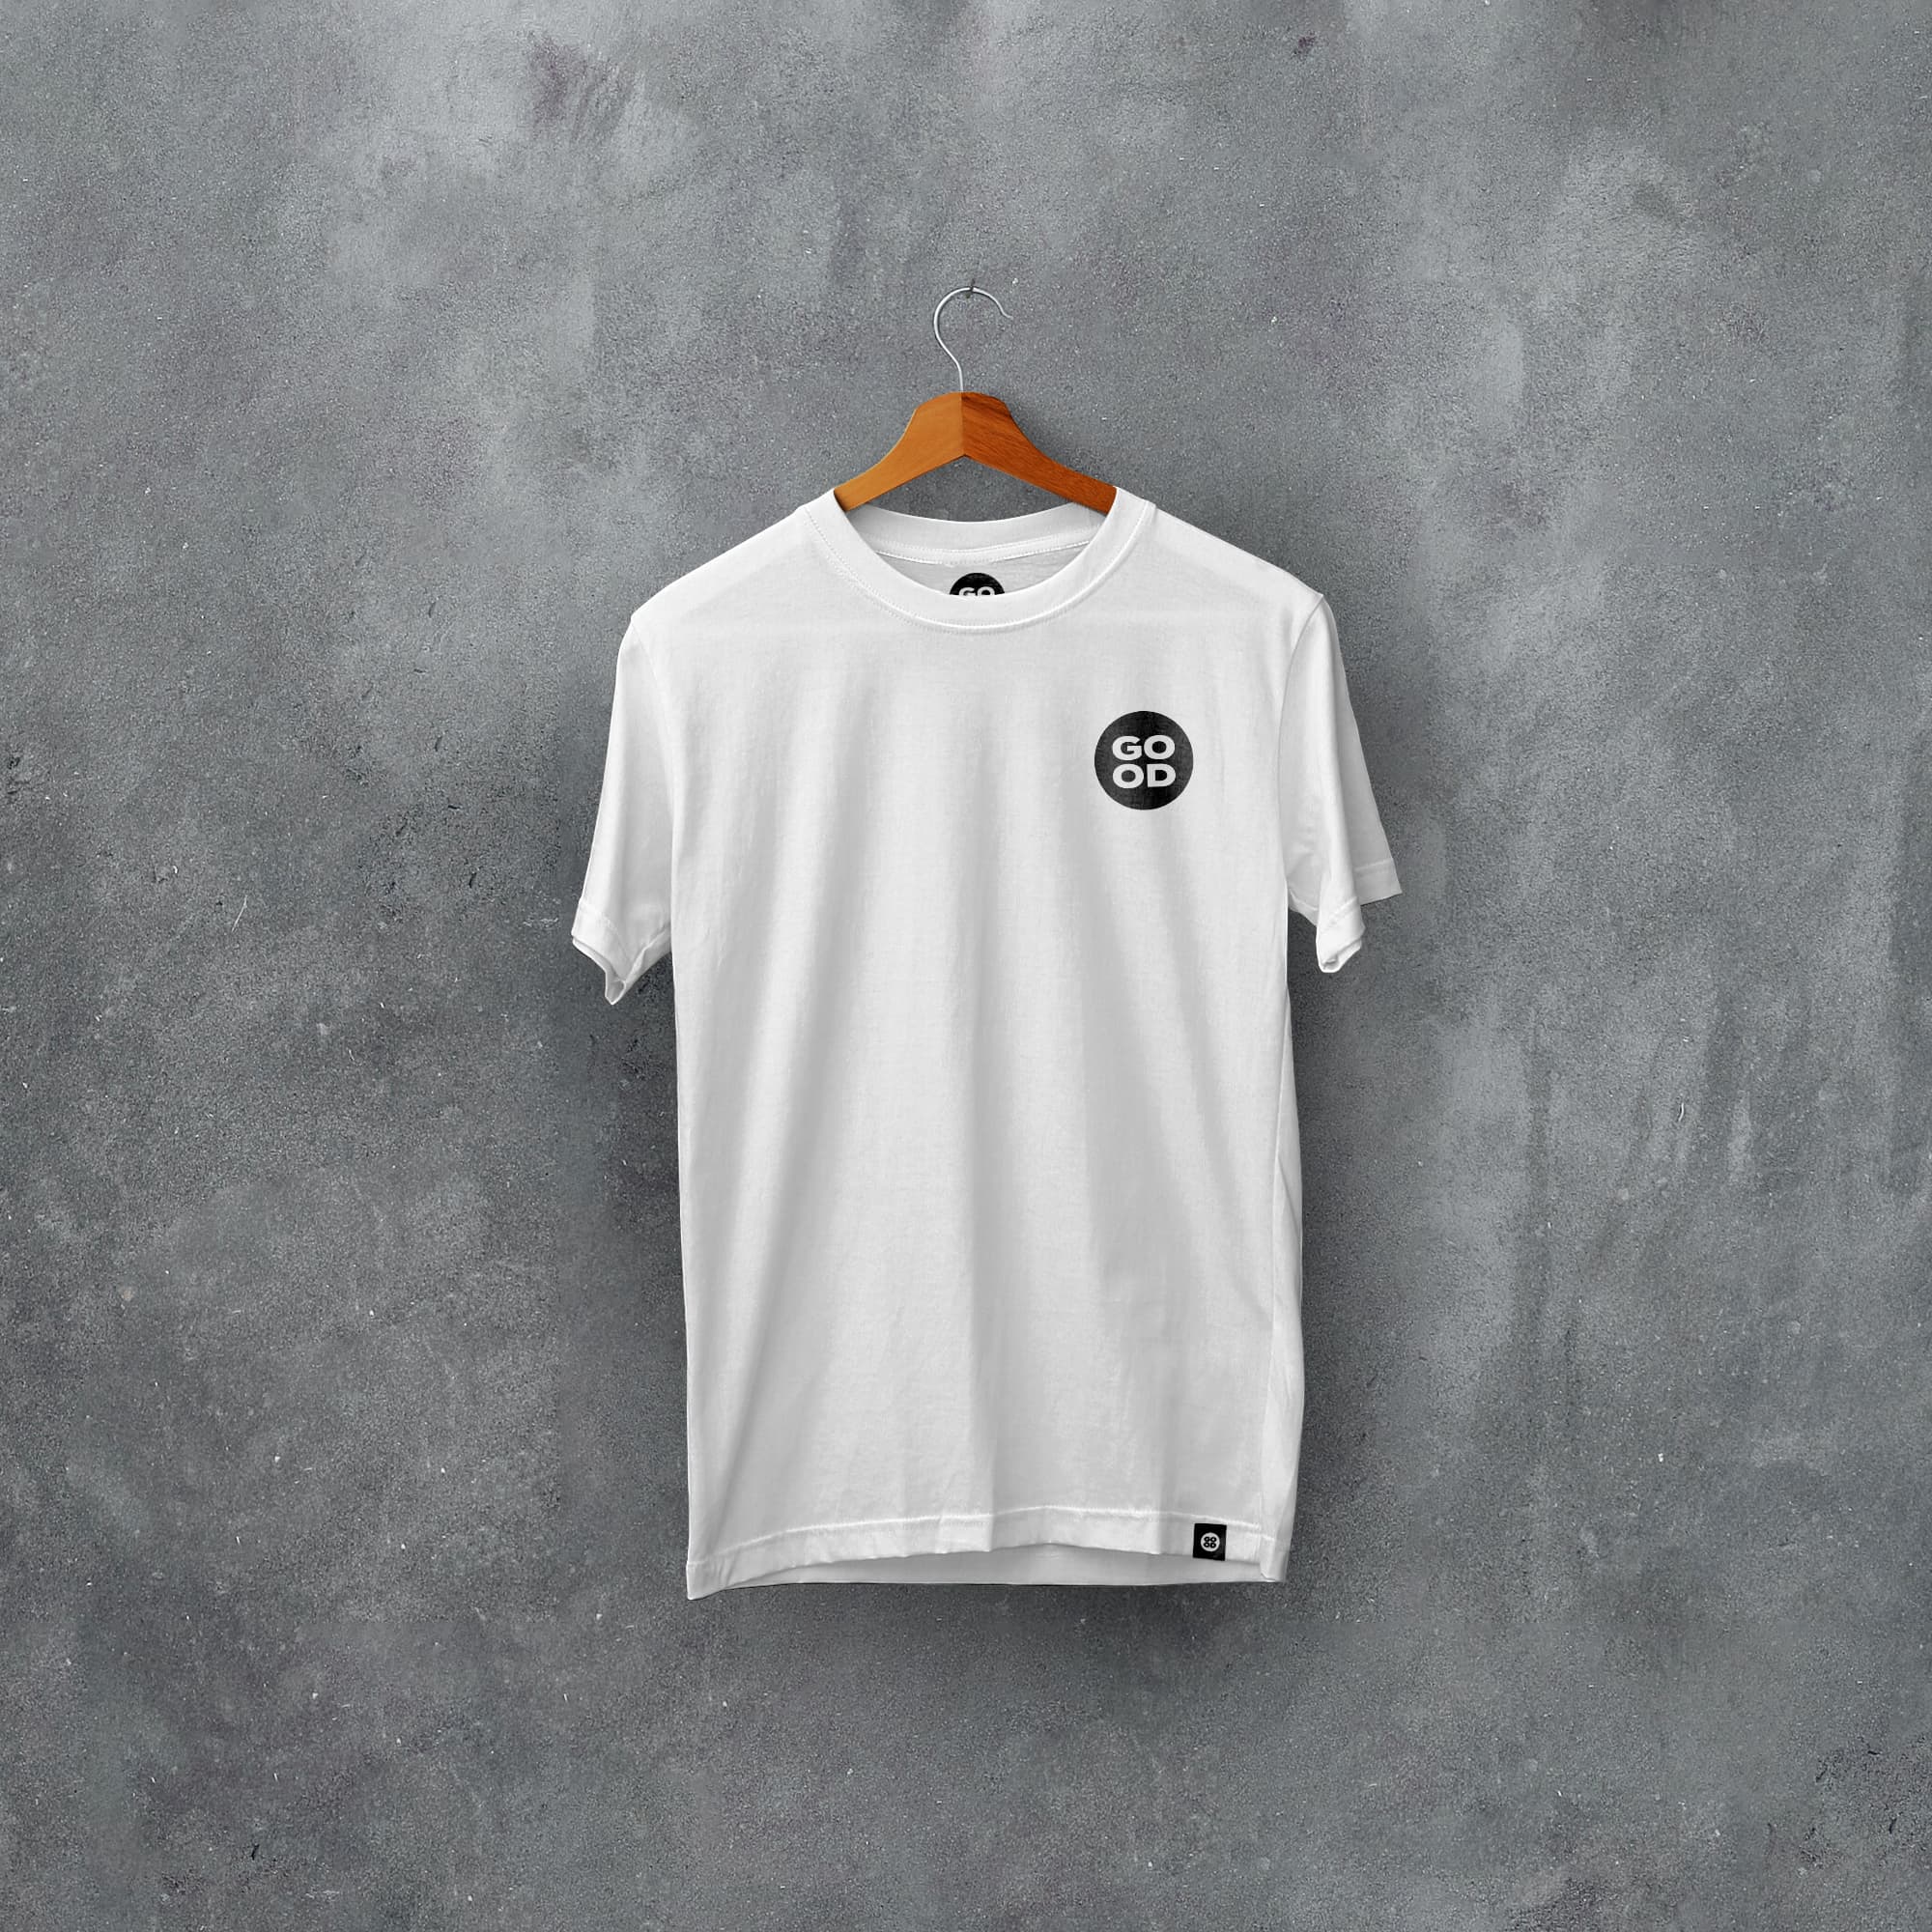 West Brom Classic Kits Football T-Shirt